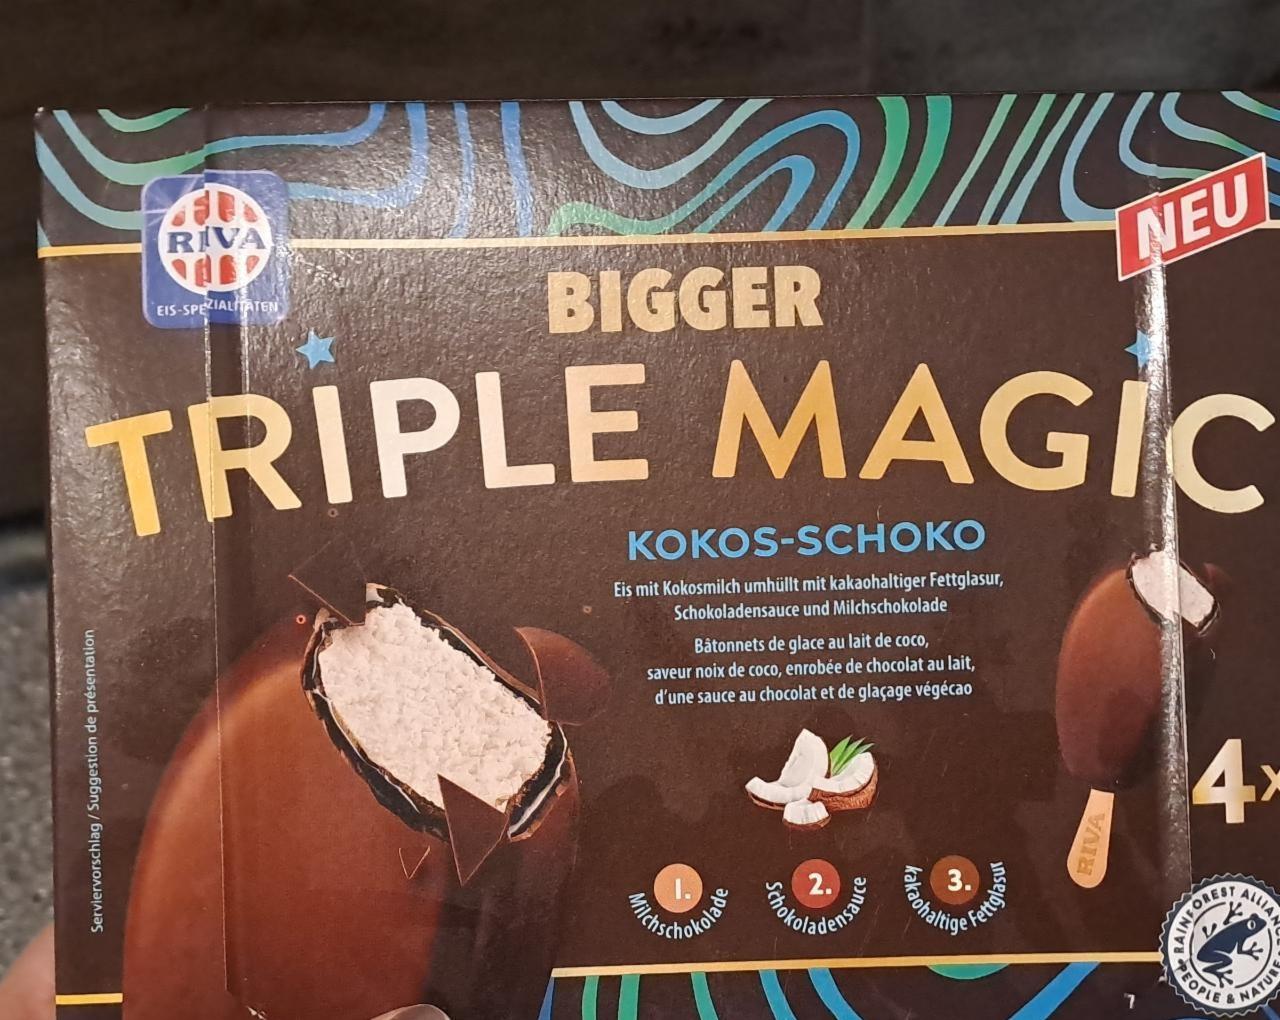 Fotografie - Bigger triple magic kokos-schoko Riva